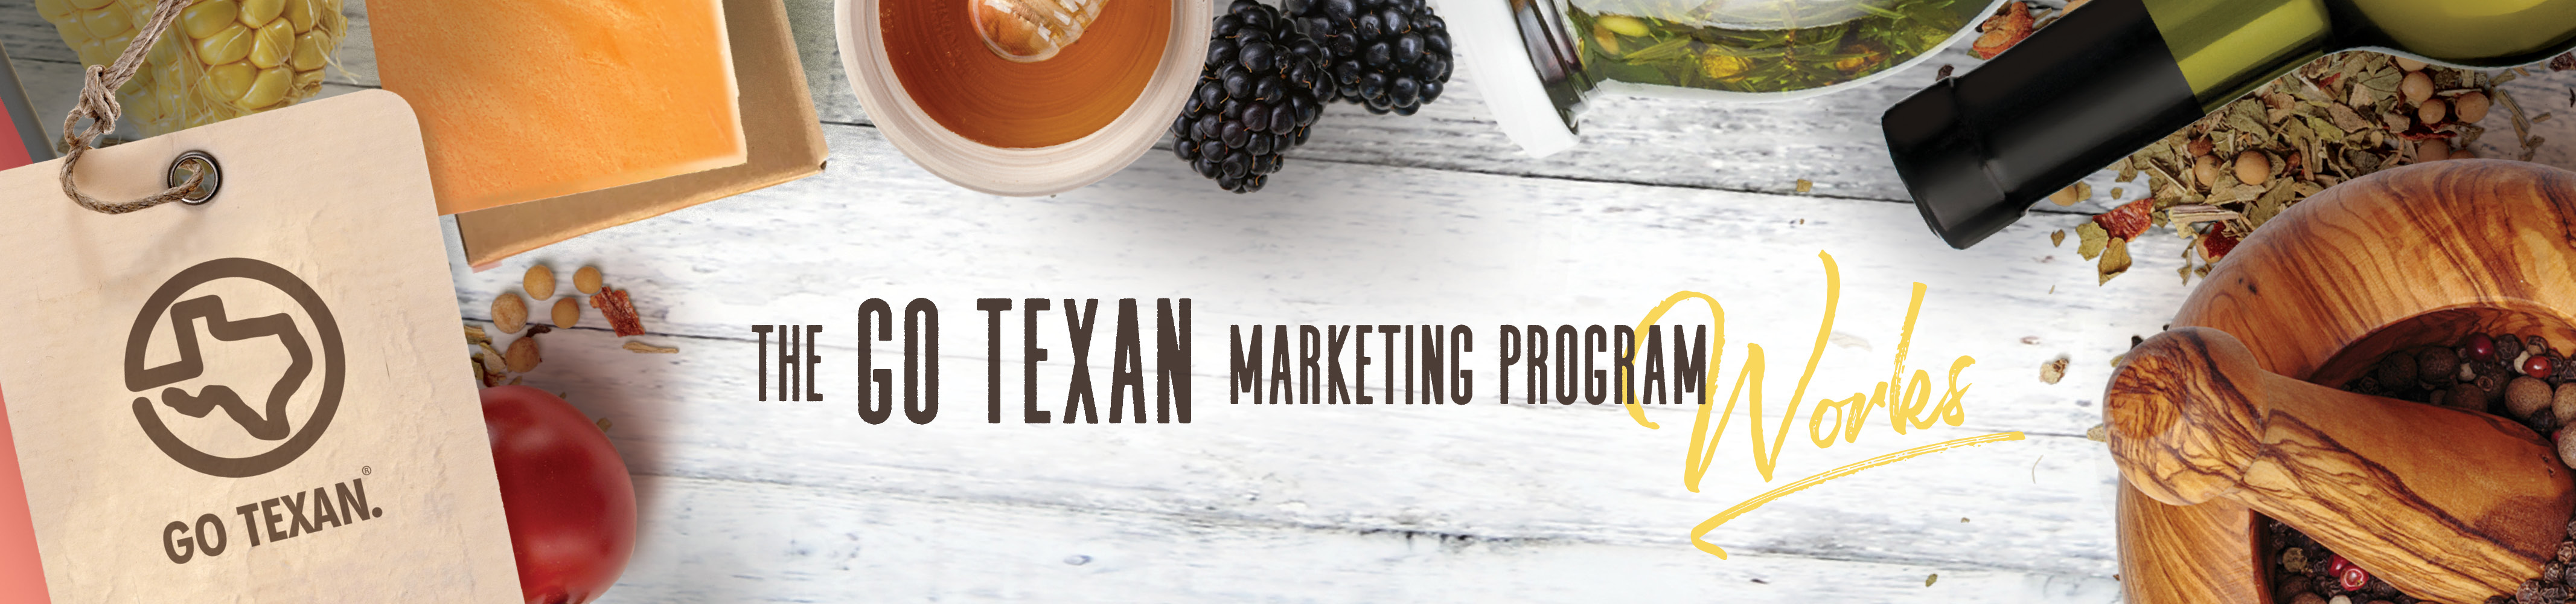 The GO TEXAN marketing program WORKS